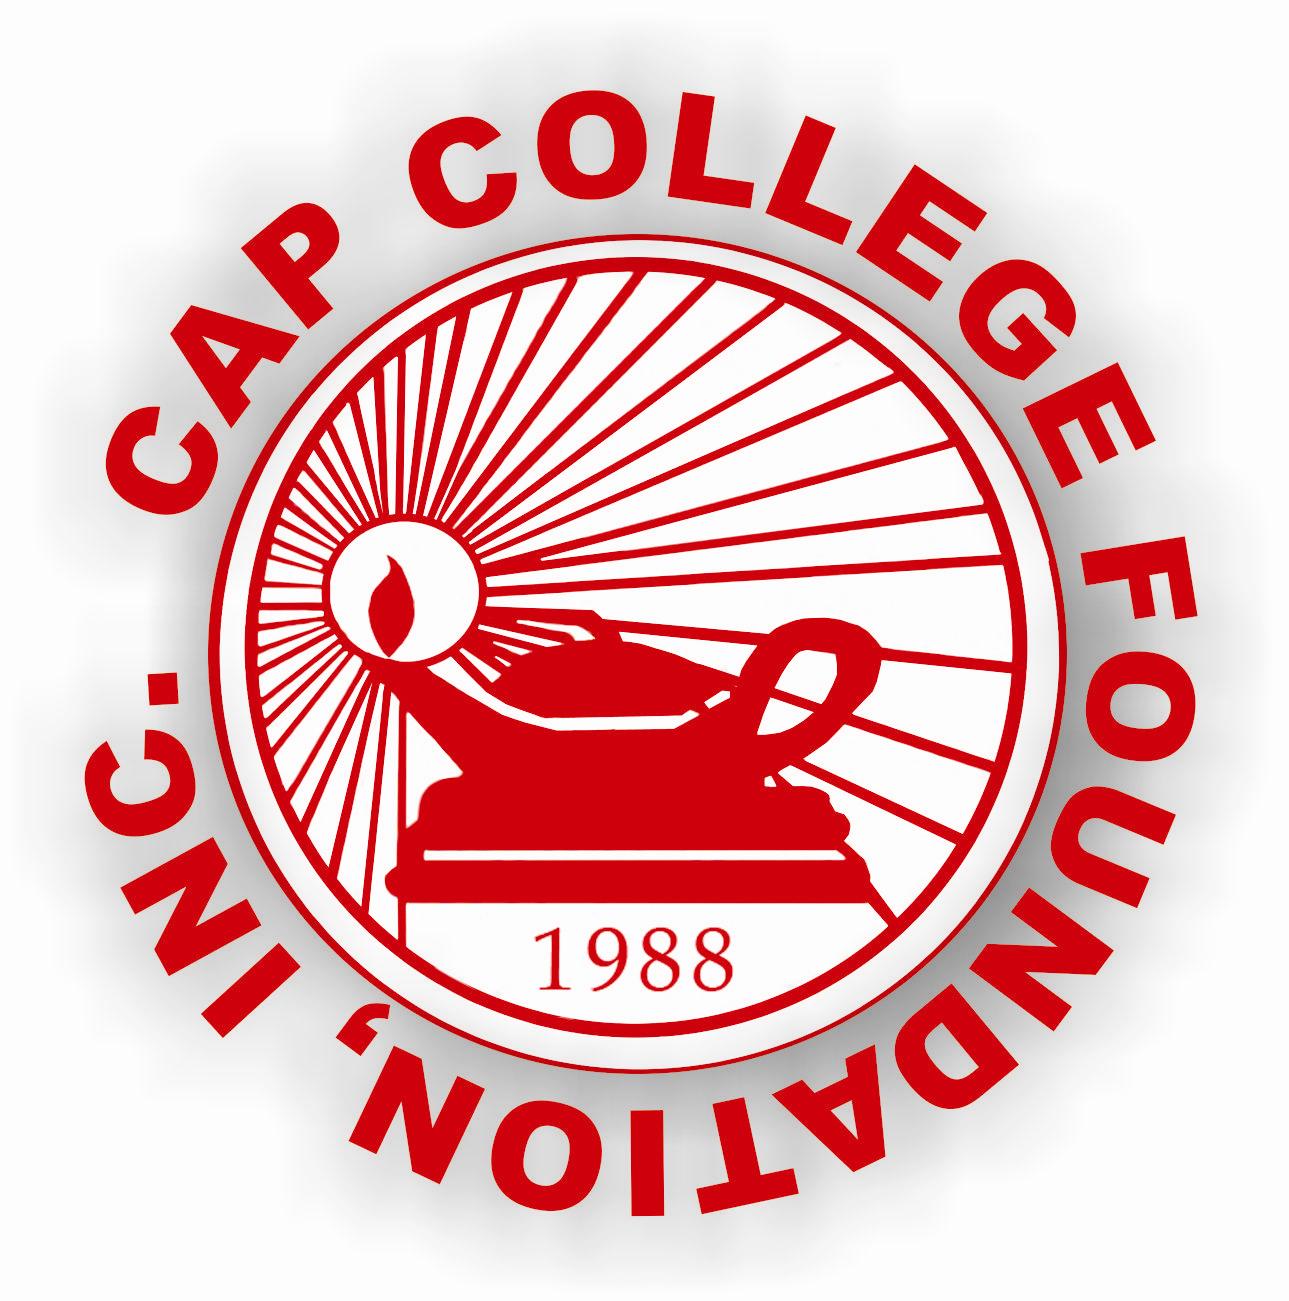 CAP College Online